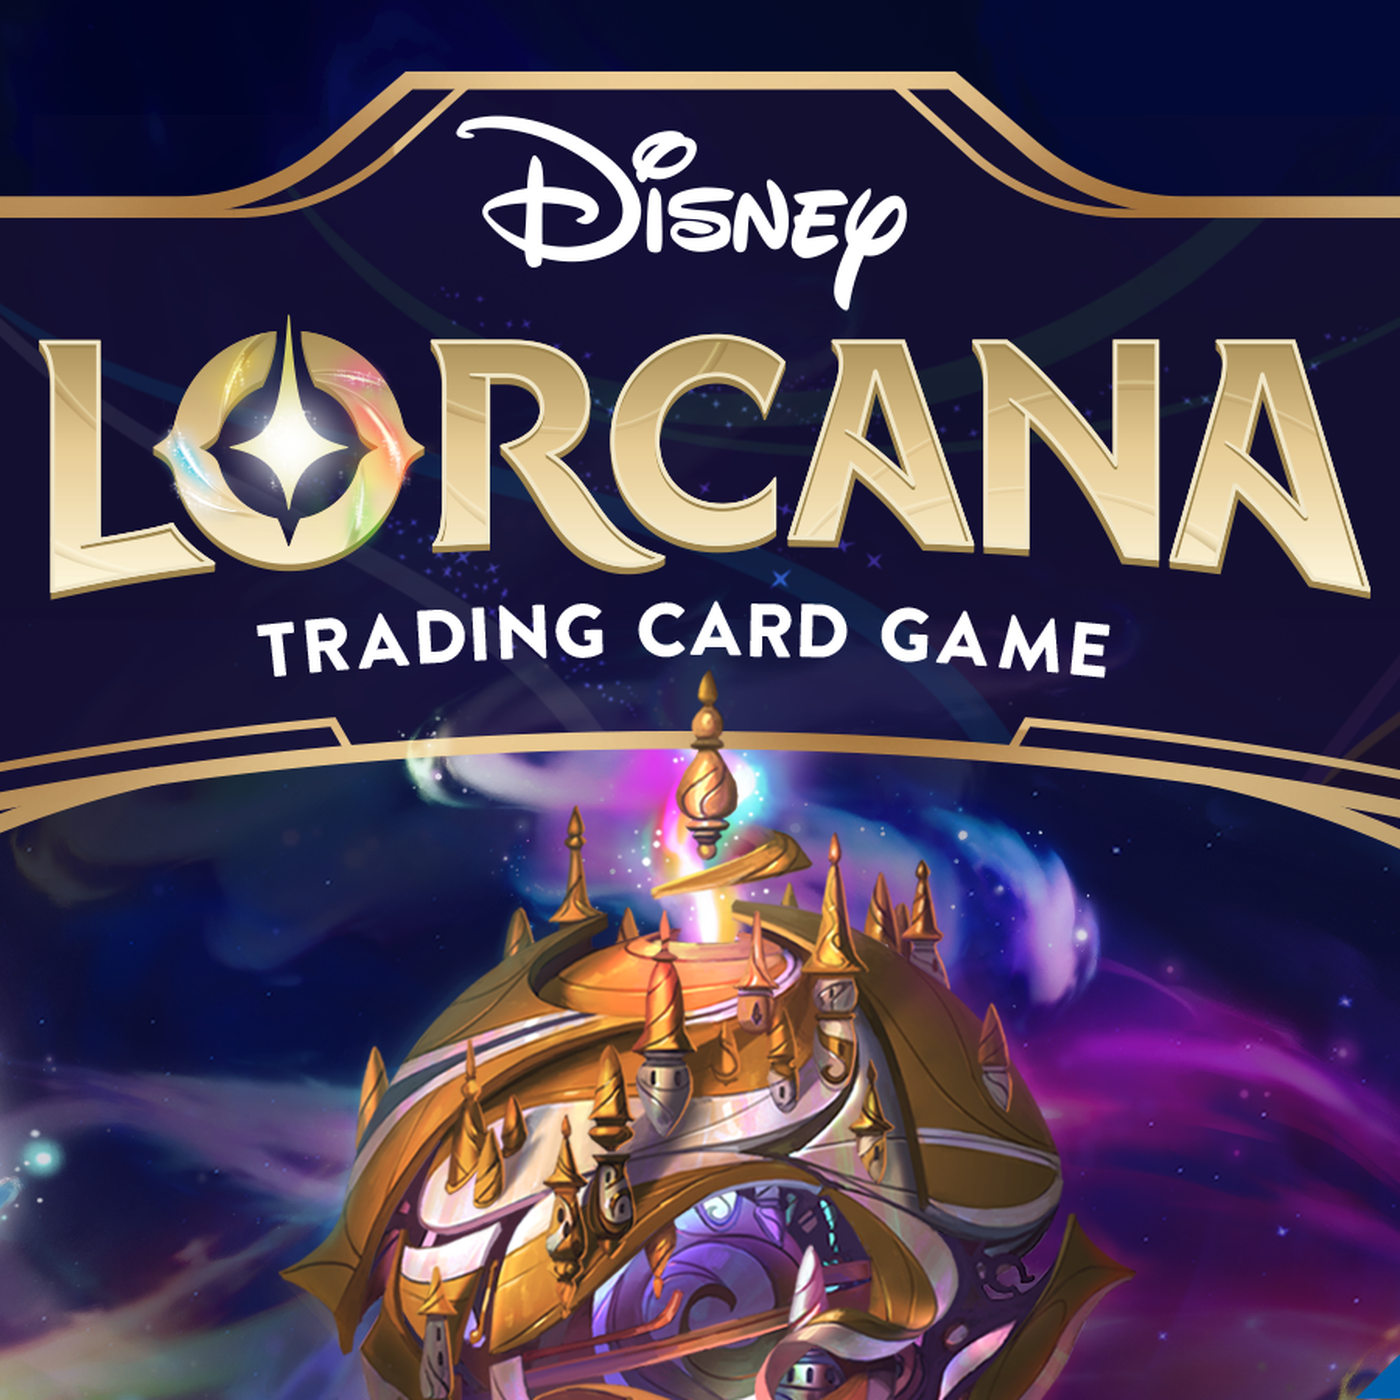 Lorcana: Disney has entered into the TCG world.